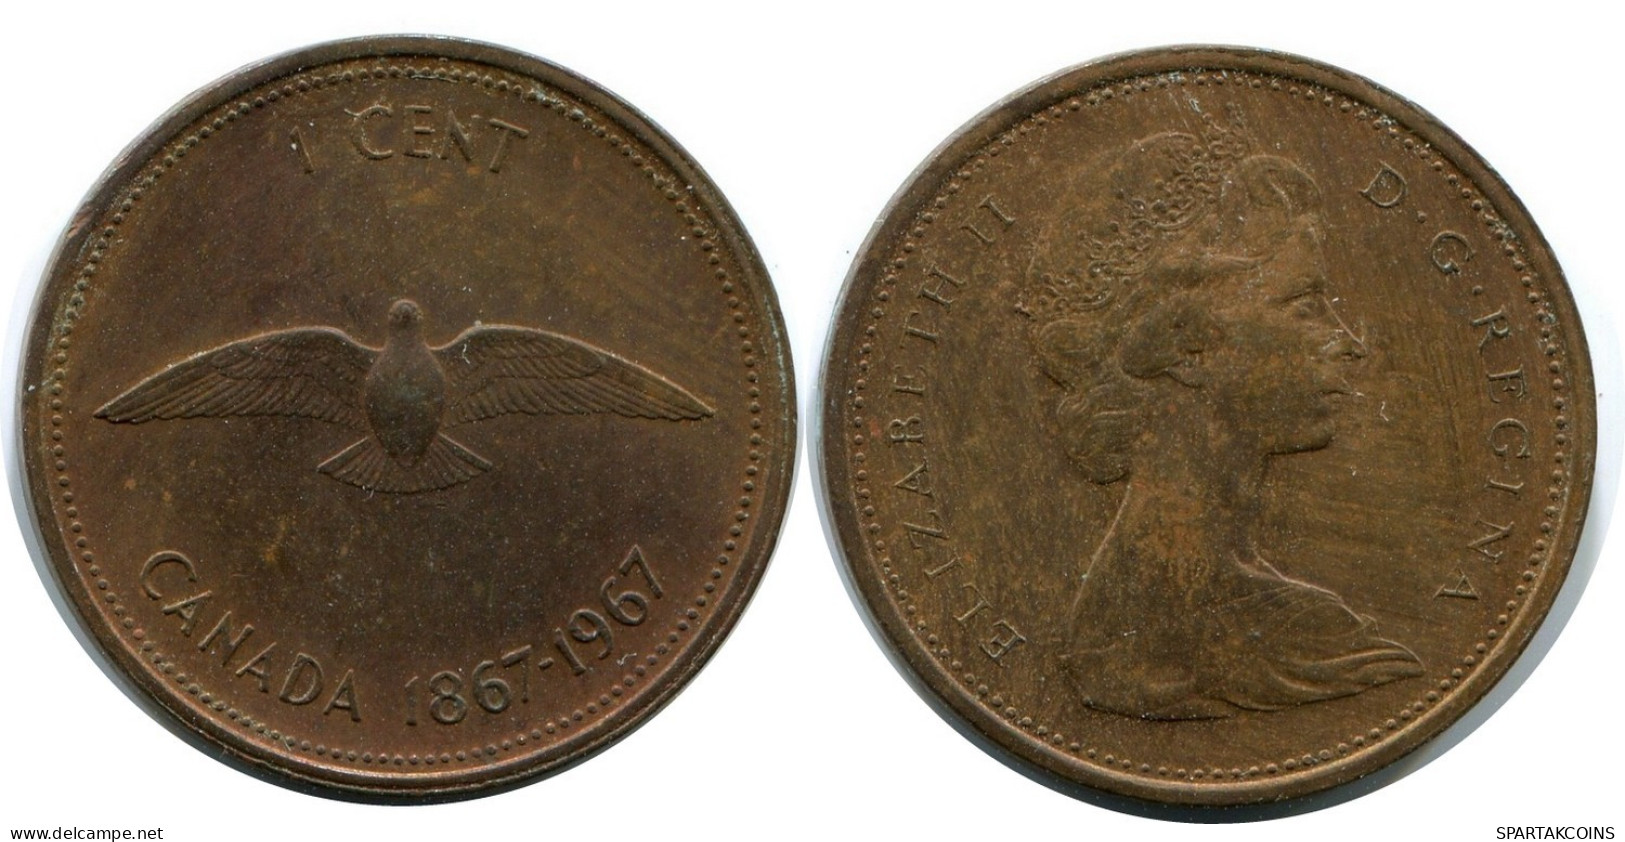 1 CENT 1967 CANADA Coin #AX380.U.A - Canada